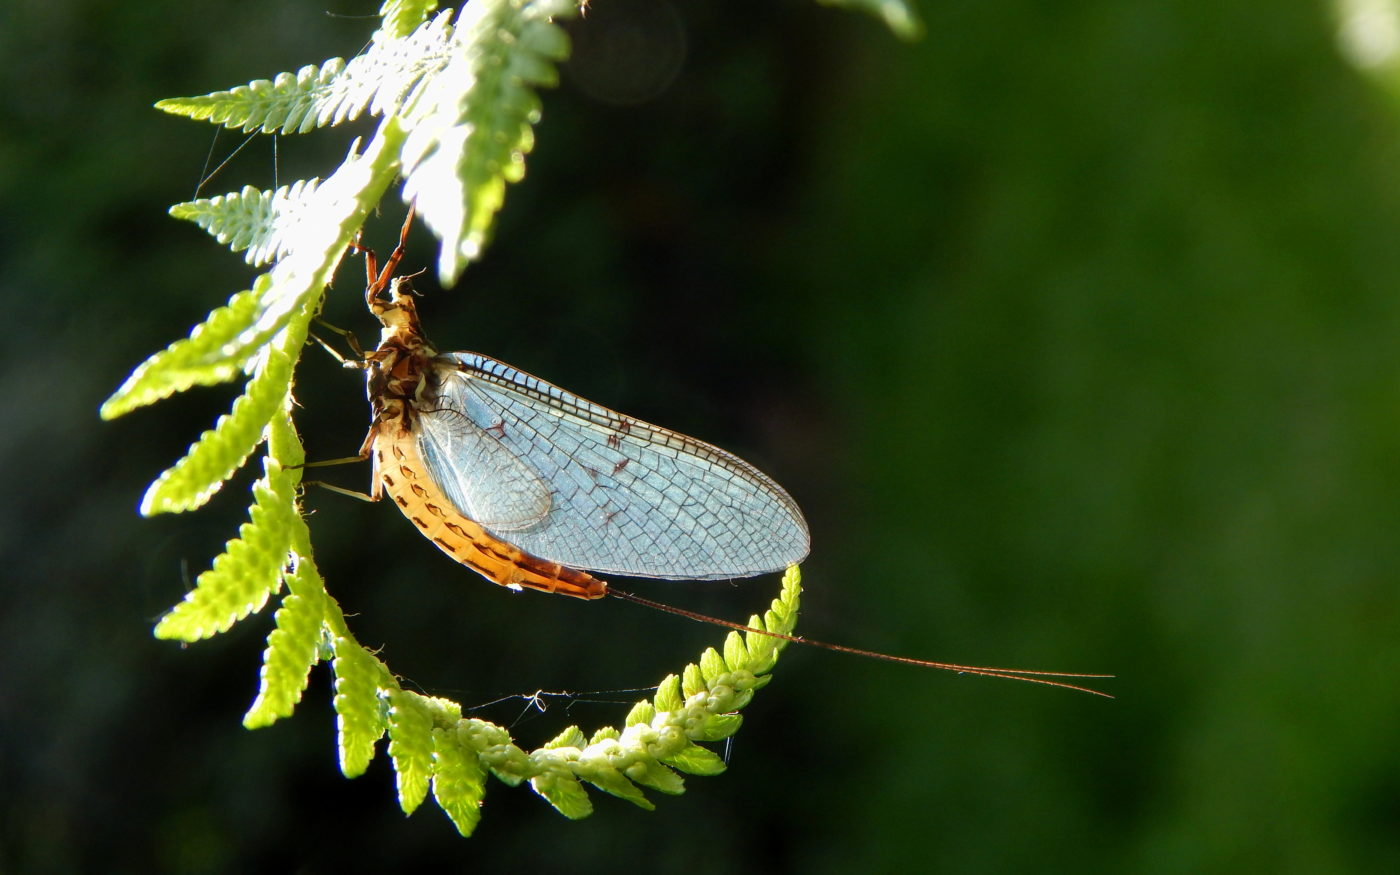 Mayfly on an unfurled fern frond